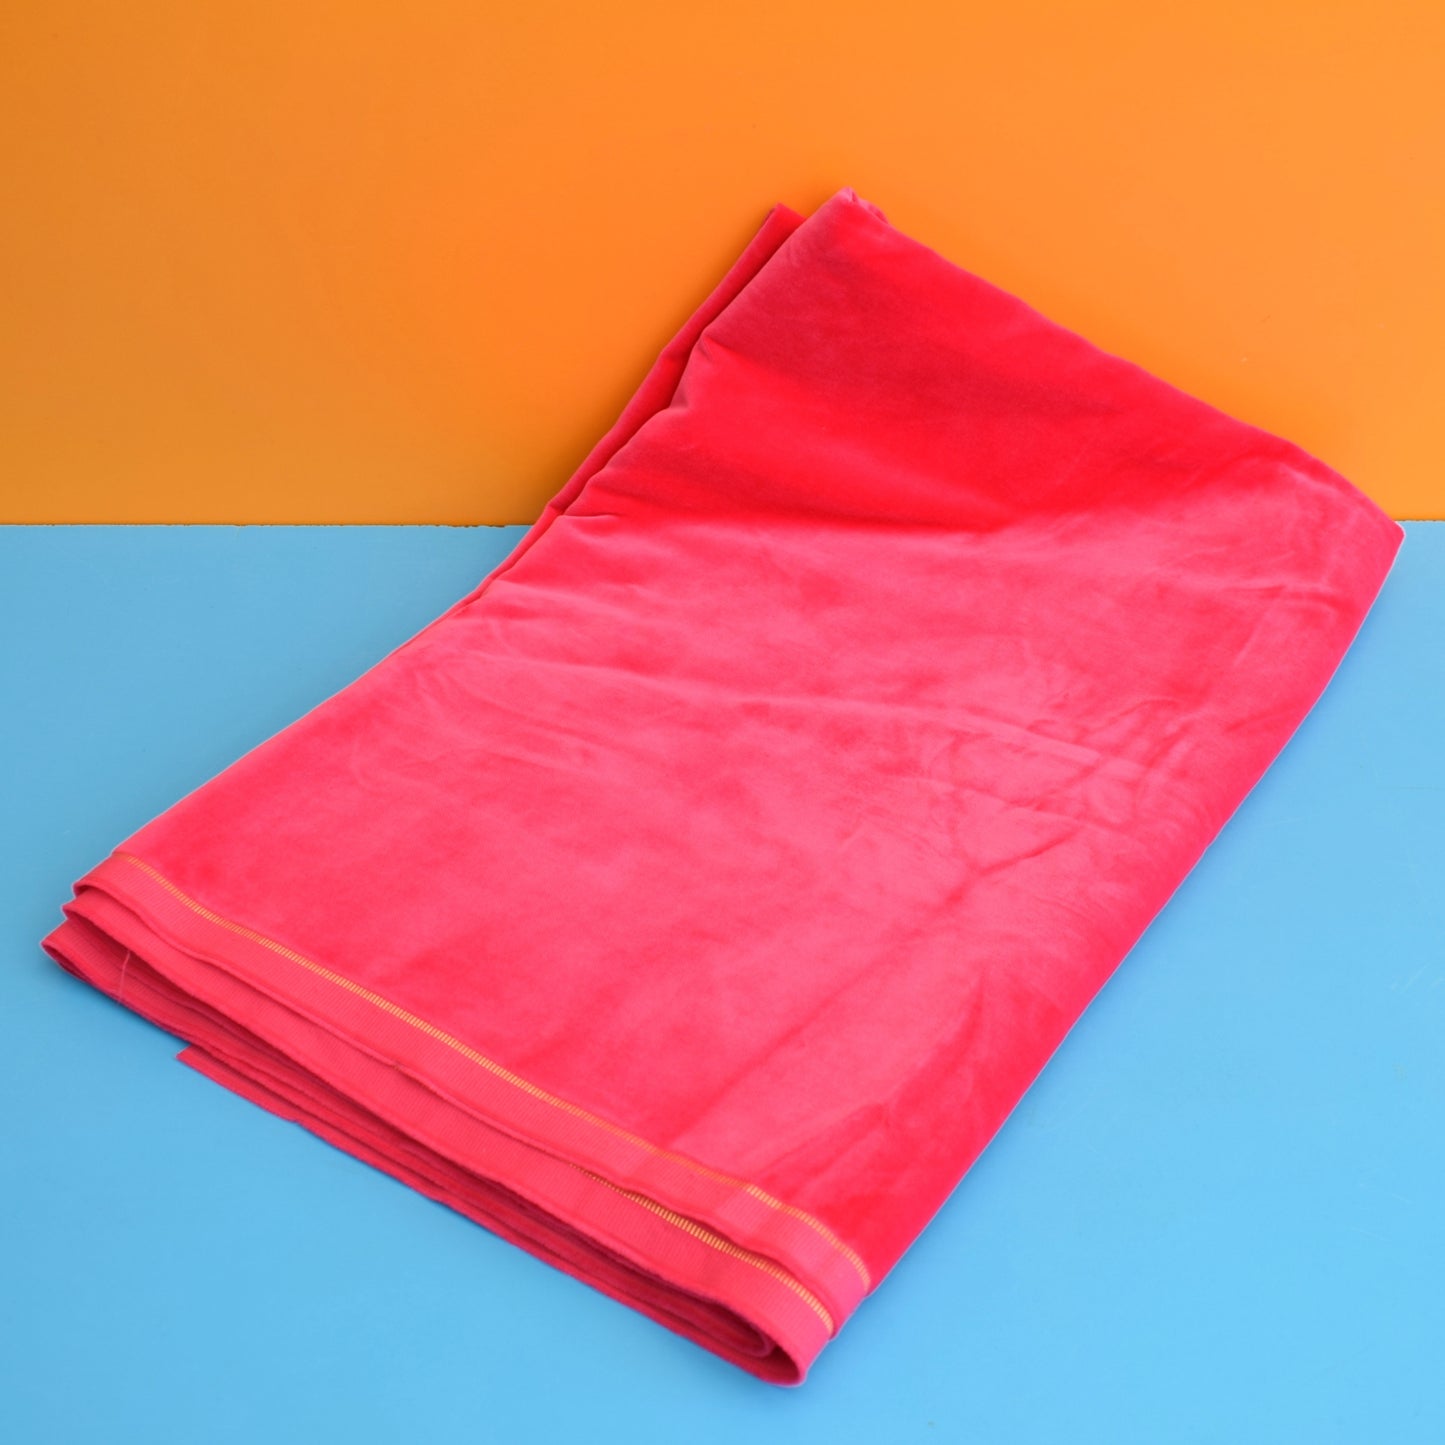 Vintage 1960s Quality Cotton Velvet Fabric - Hot Pink – Pineapple Retro